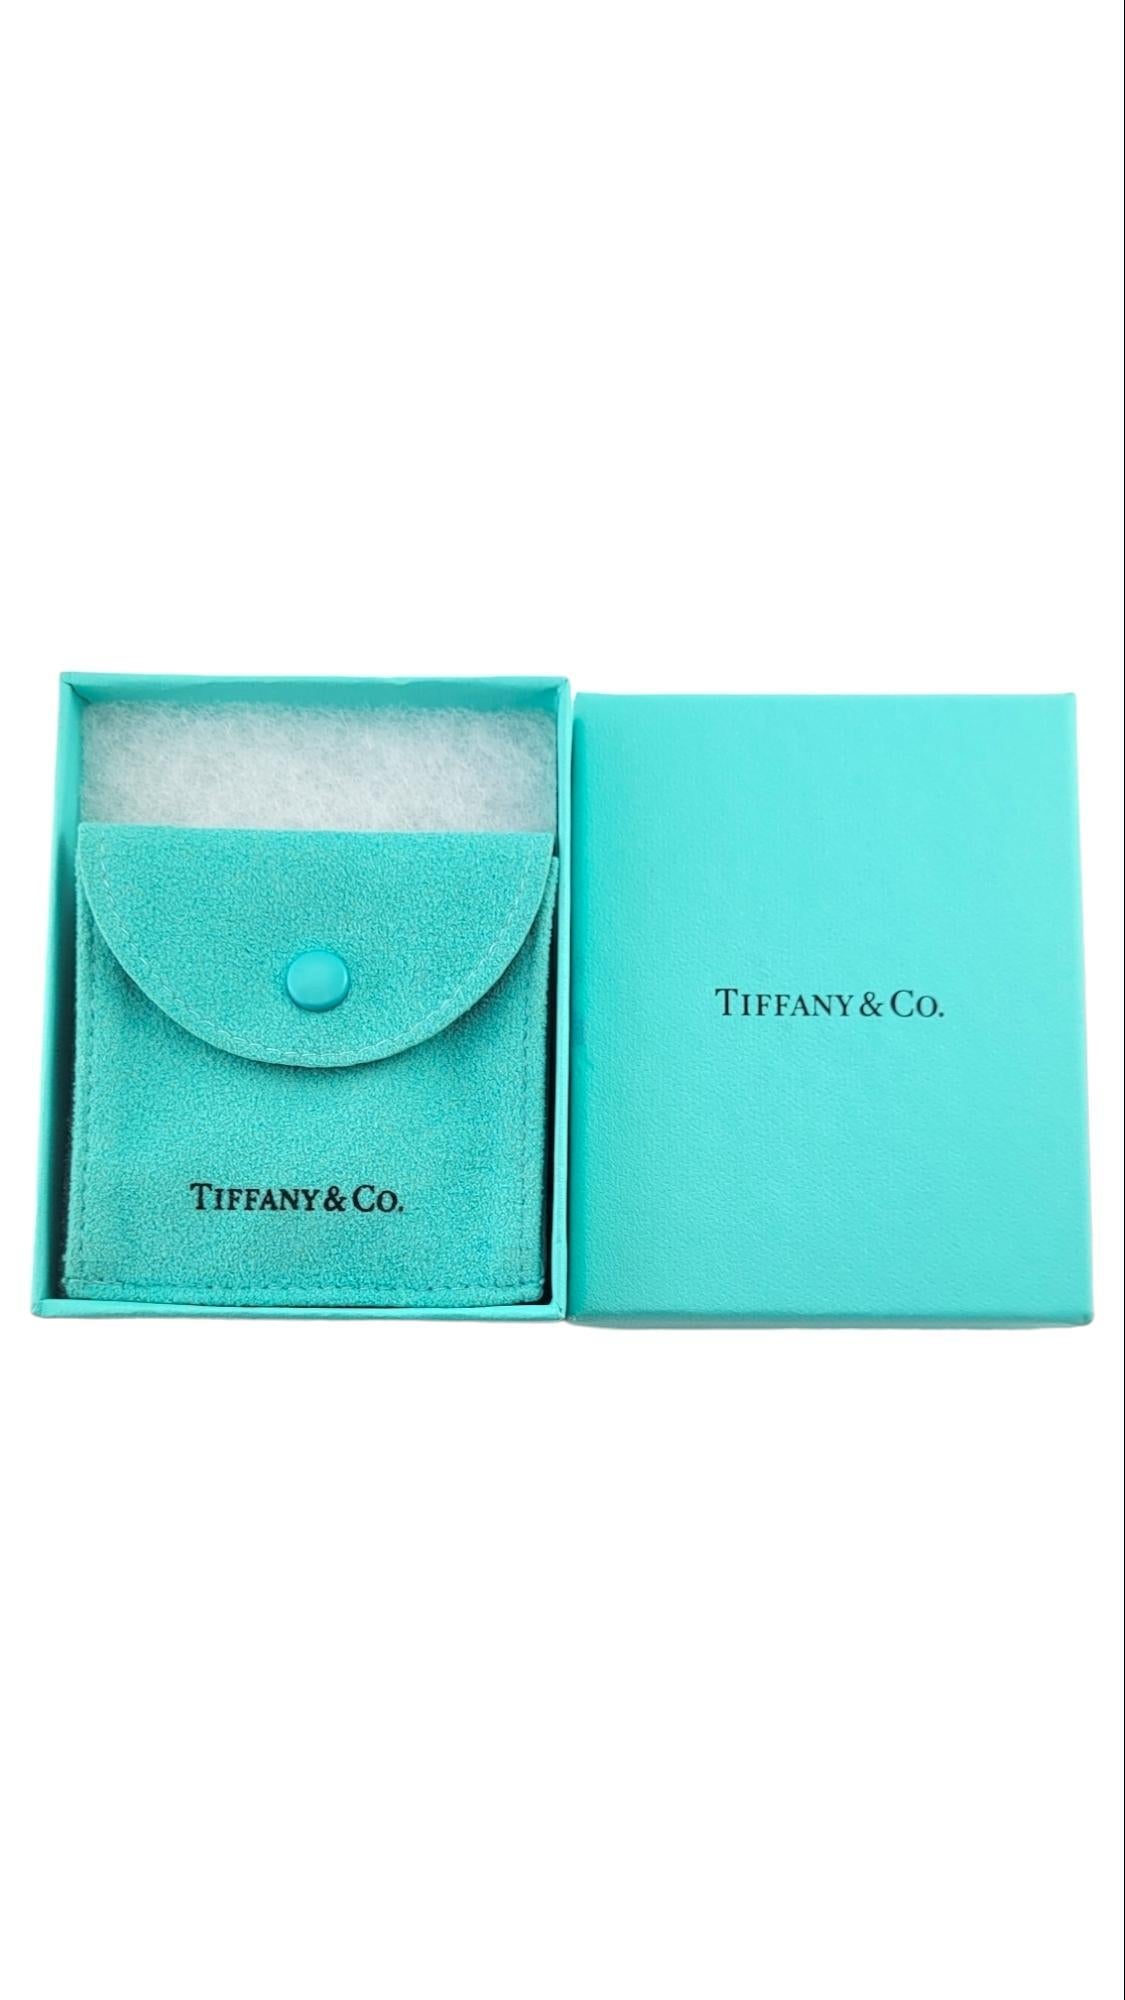 Tiffany & Co. Sterling Silver Ball Stud Earrings w/ Tiffany Box #15823 3